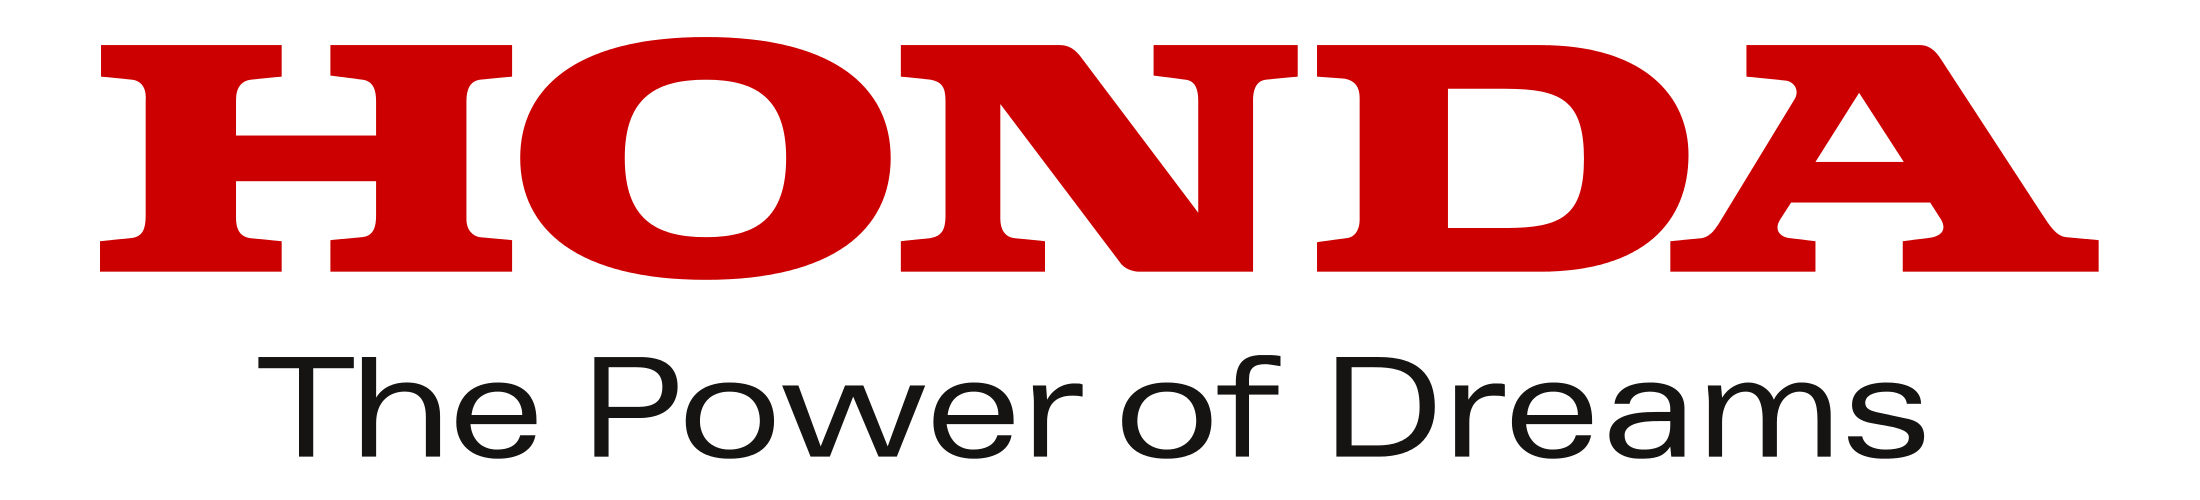 Honda-text-logo-2200x500.png